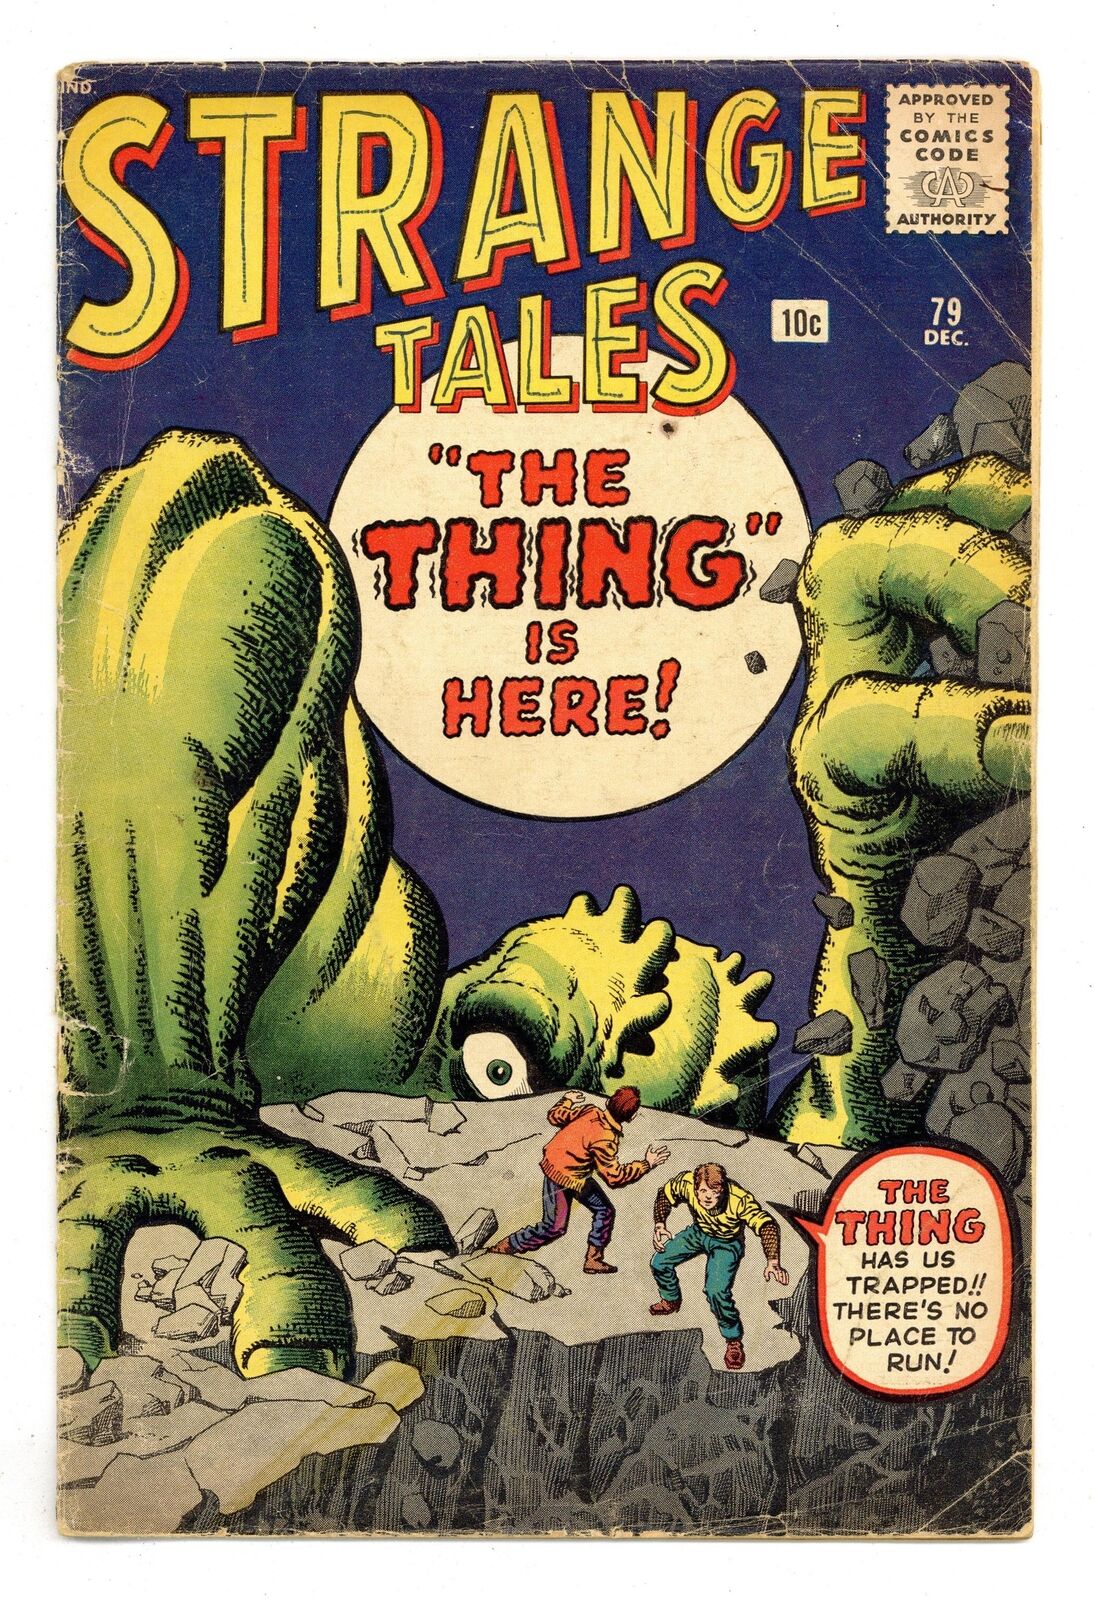 Strange Tales #79 GD 2.0 1960 Dr. Strange prototype